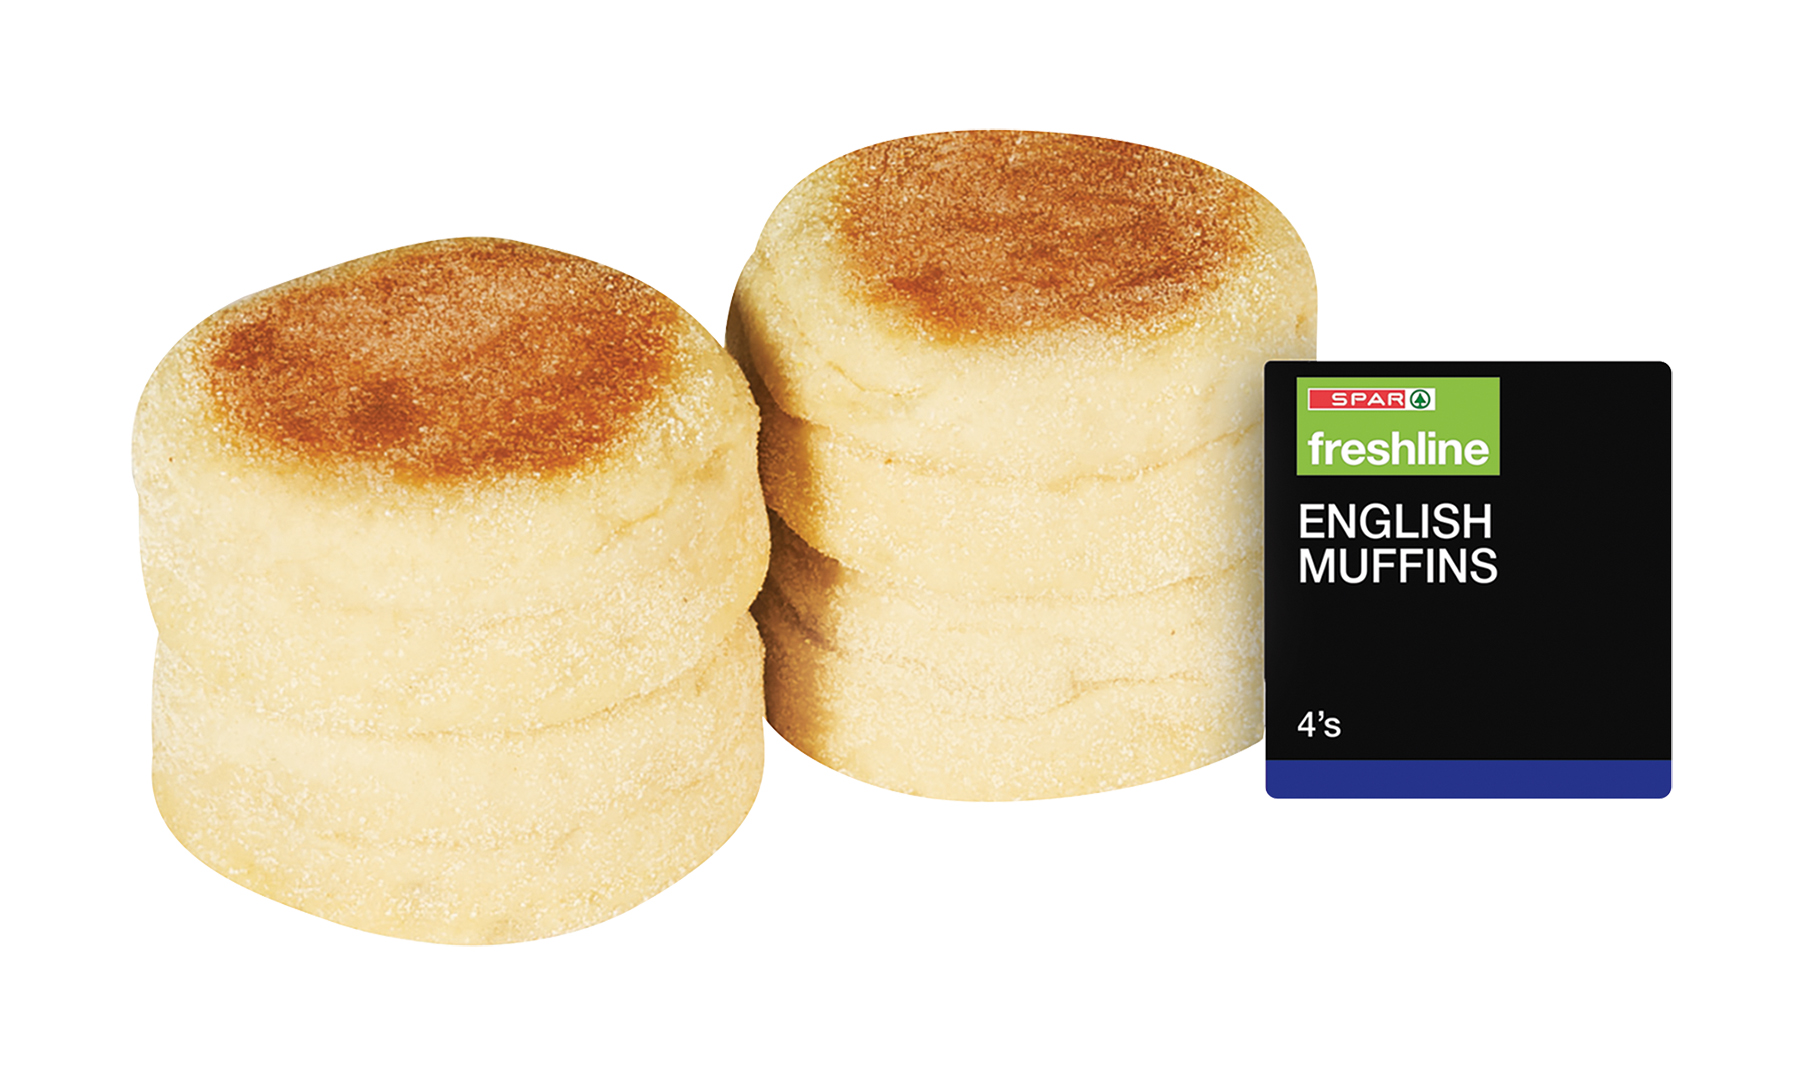 freshline english muffins